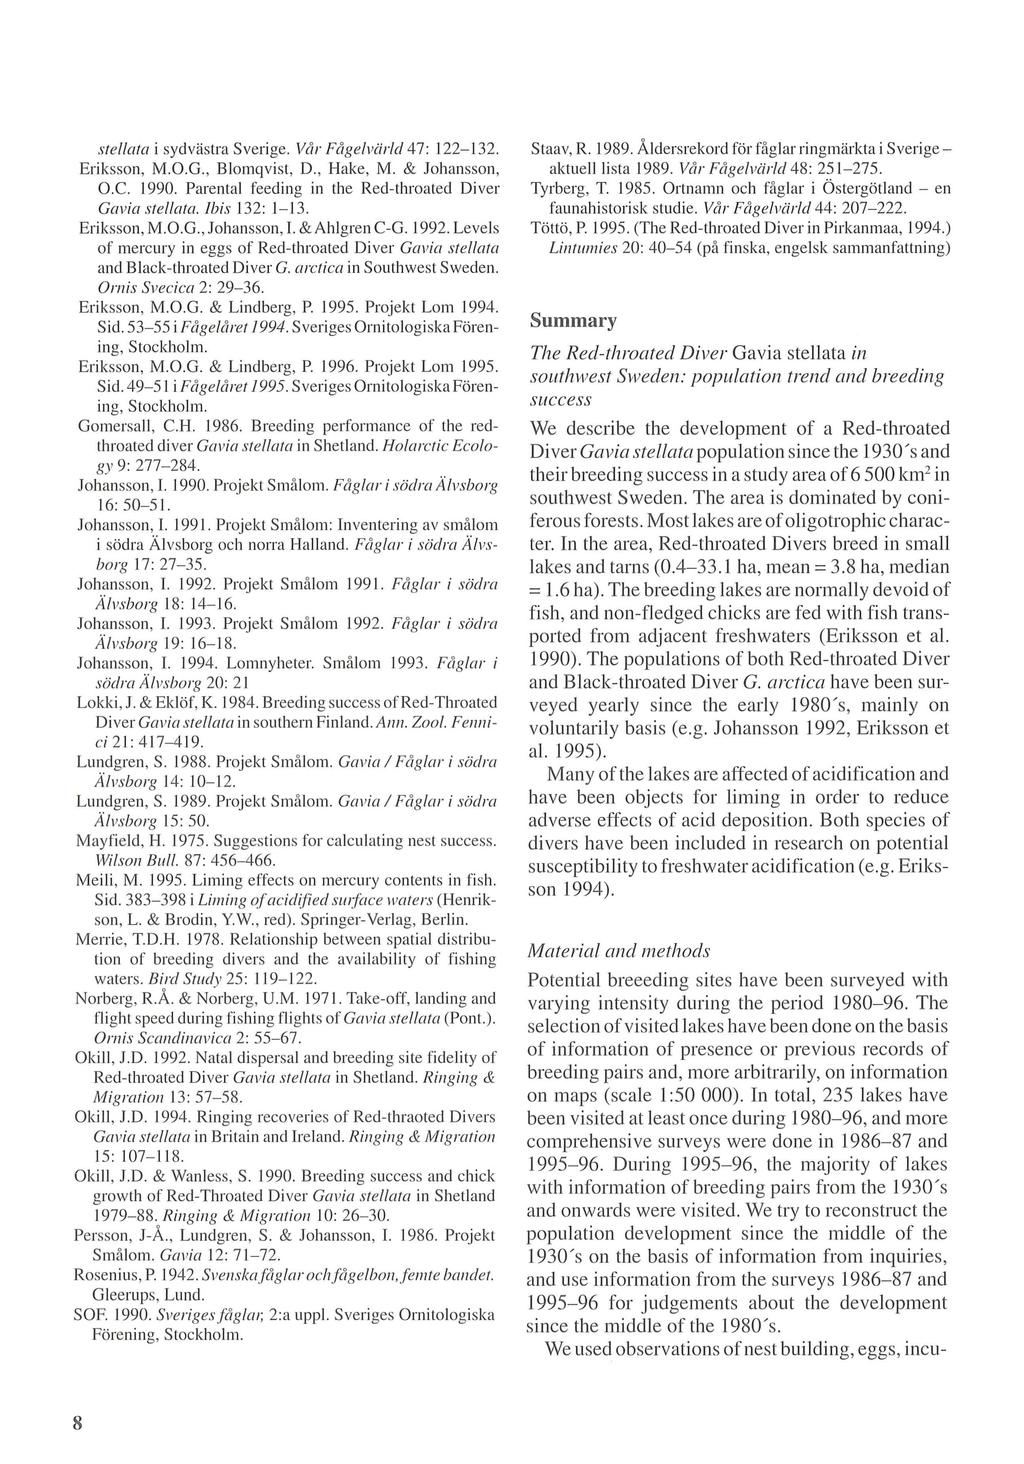 stellata i sydvastra Sverige. val' Fage /VCir/d 47: 122-132. Eriksson, M.O.G., Blomqvist, D., Hake, M. & Johansson, O.c. 1990. Parental feed ing in the Red-throated Diver Gavia stellata.